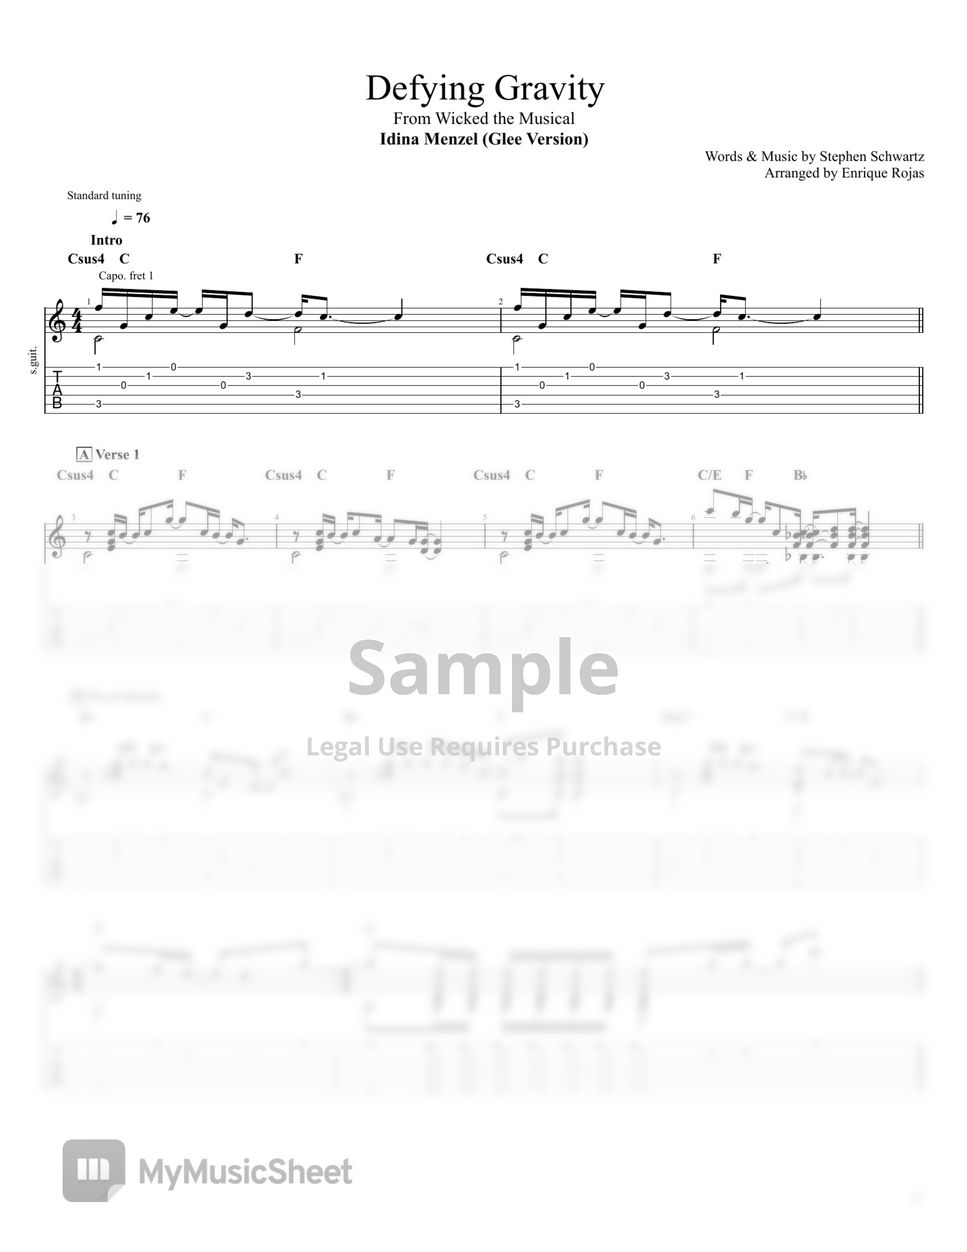 Idina Menzel - Defying Gravity (Fingerstyle guitar arrangement) by Enrique Rojas